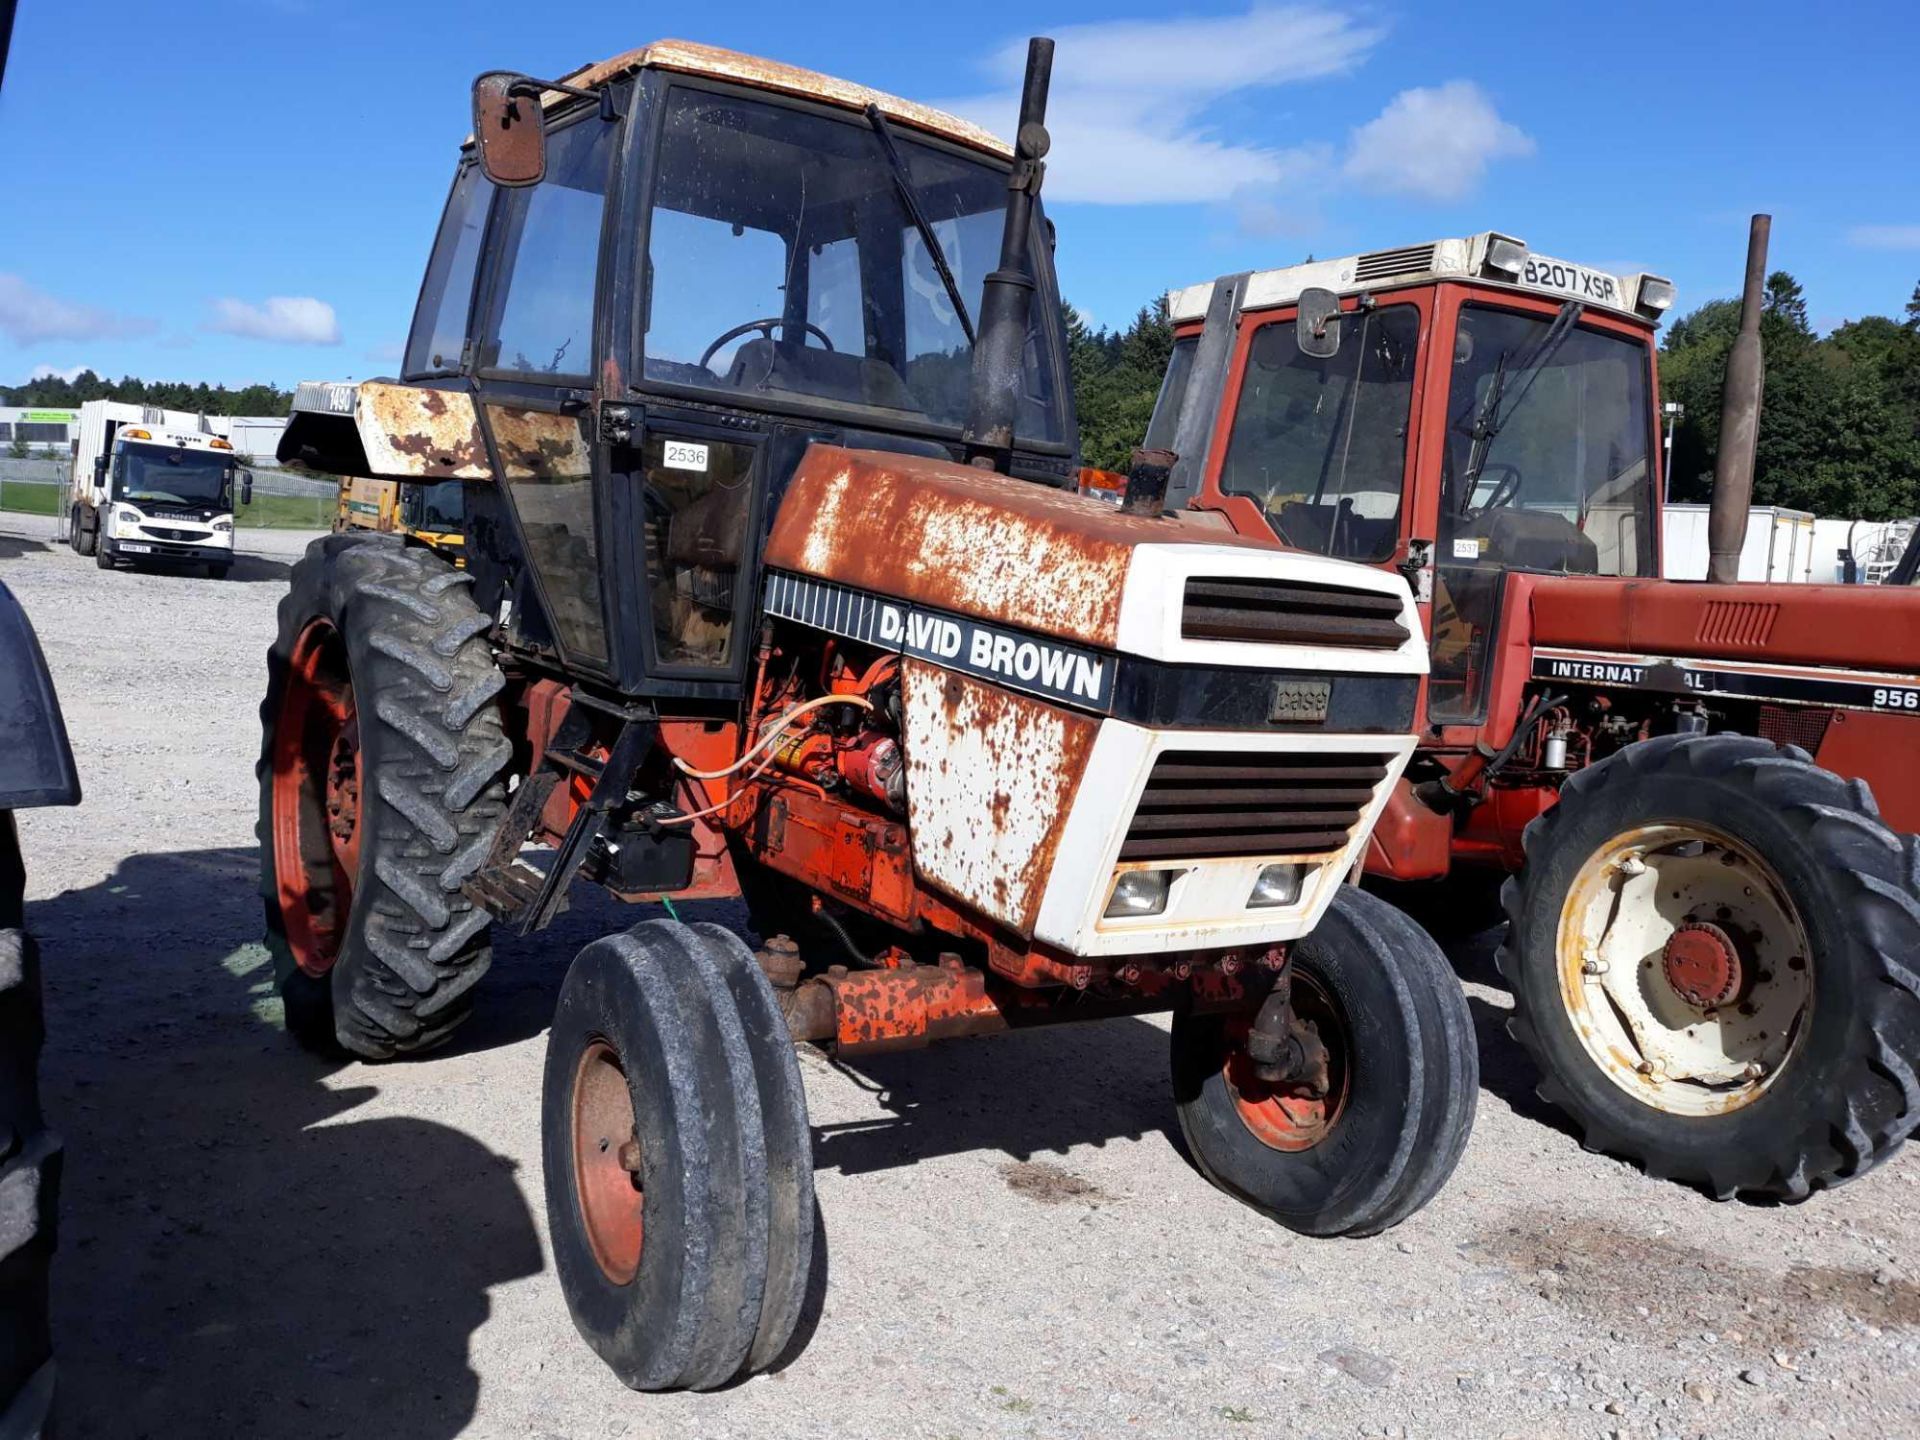 David Brown 1490 - 0cc Tractor - Image 4 of 4